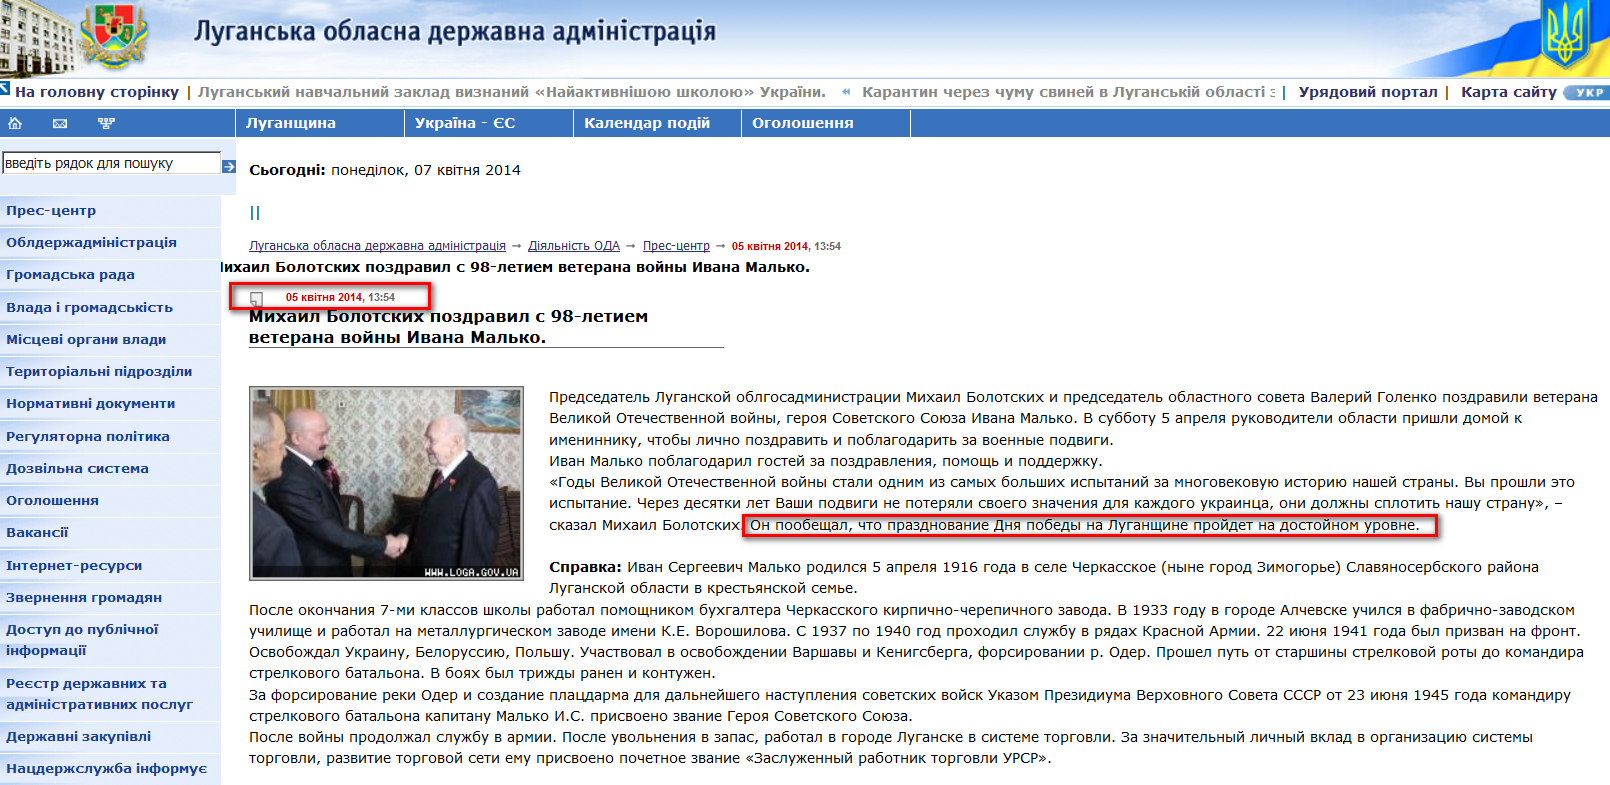 http://www.loga.gov.ua/oda/press/news/2014/04/05/news_66911.html